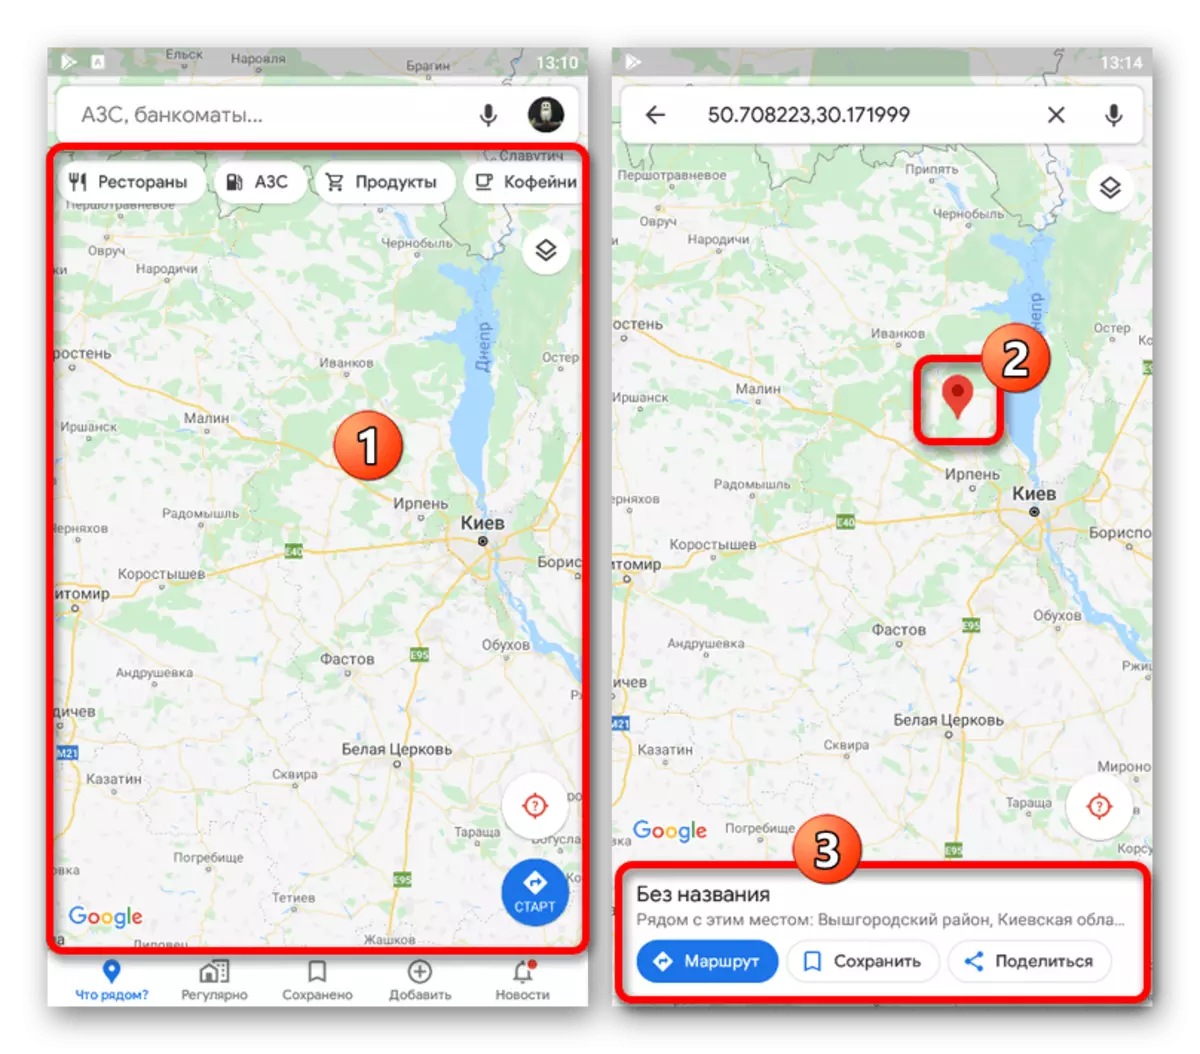 Google मानचित्र एप्लिकेशन में मानचित्र पर एक नया निशान जोड़ना